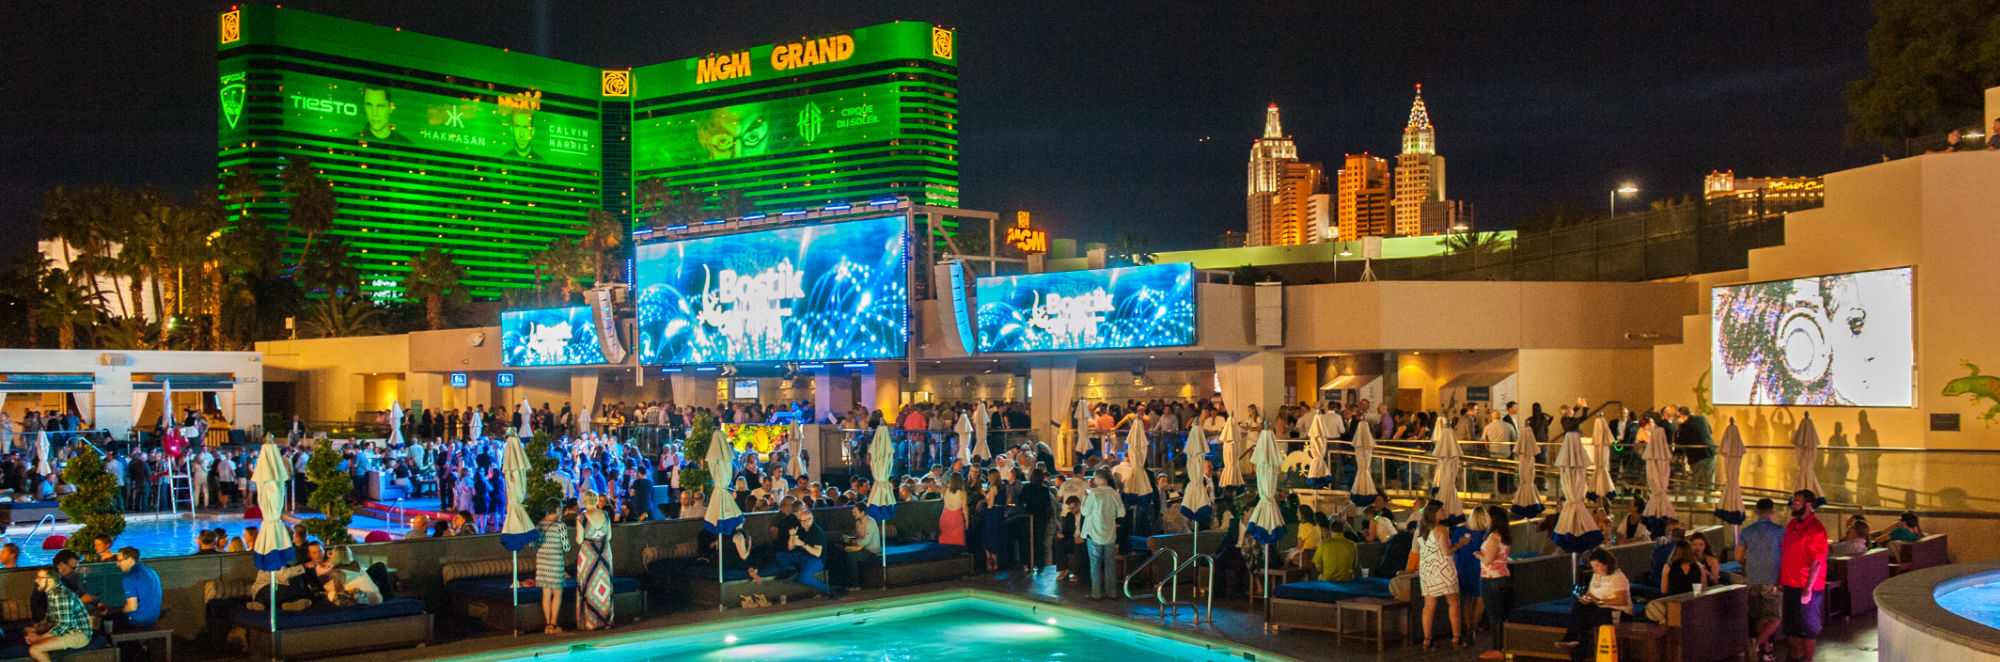 Design N Gather 2016 MGM Grand Las Vegas